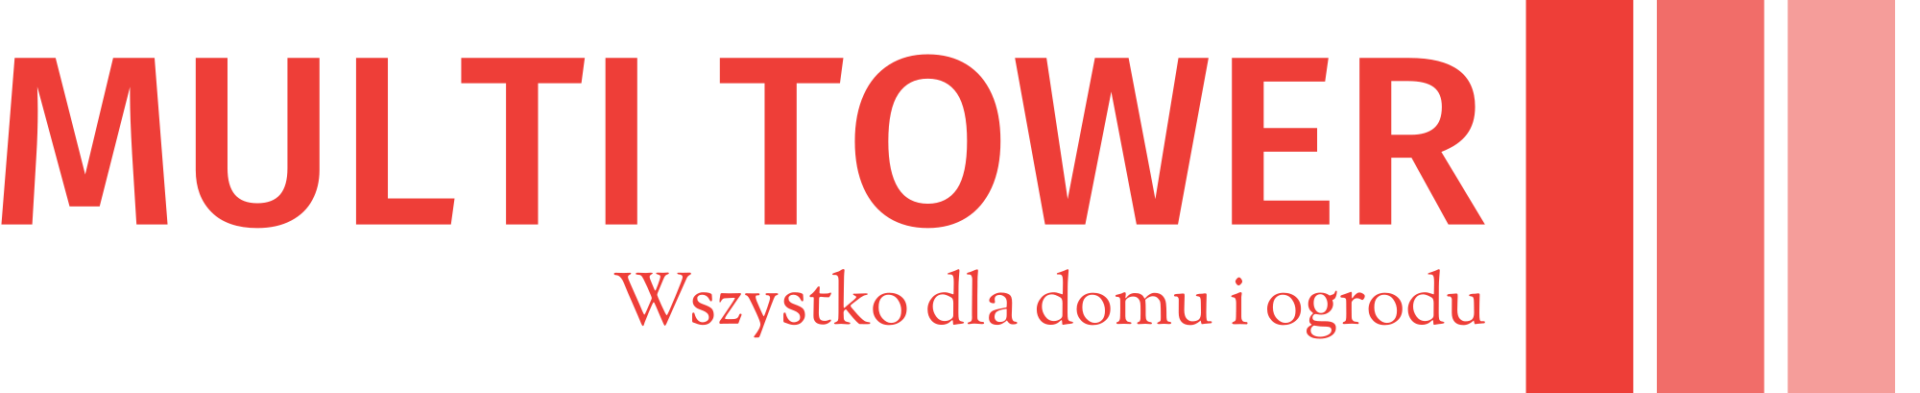 Multitower.pl